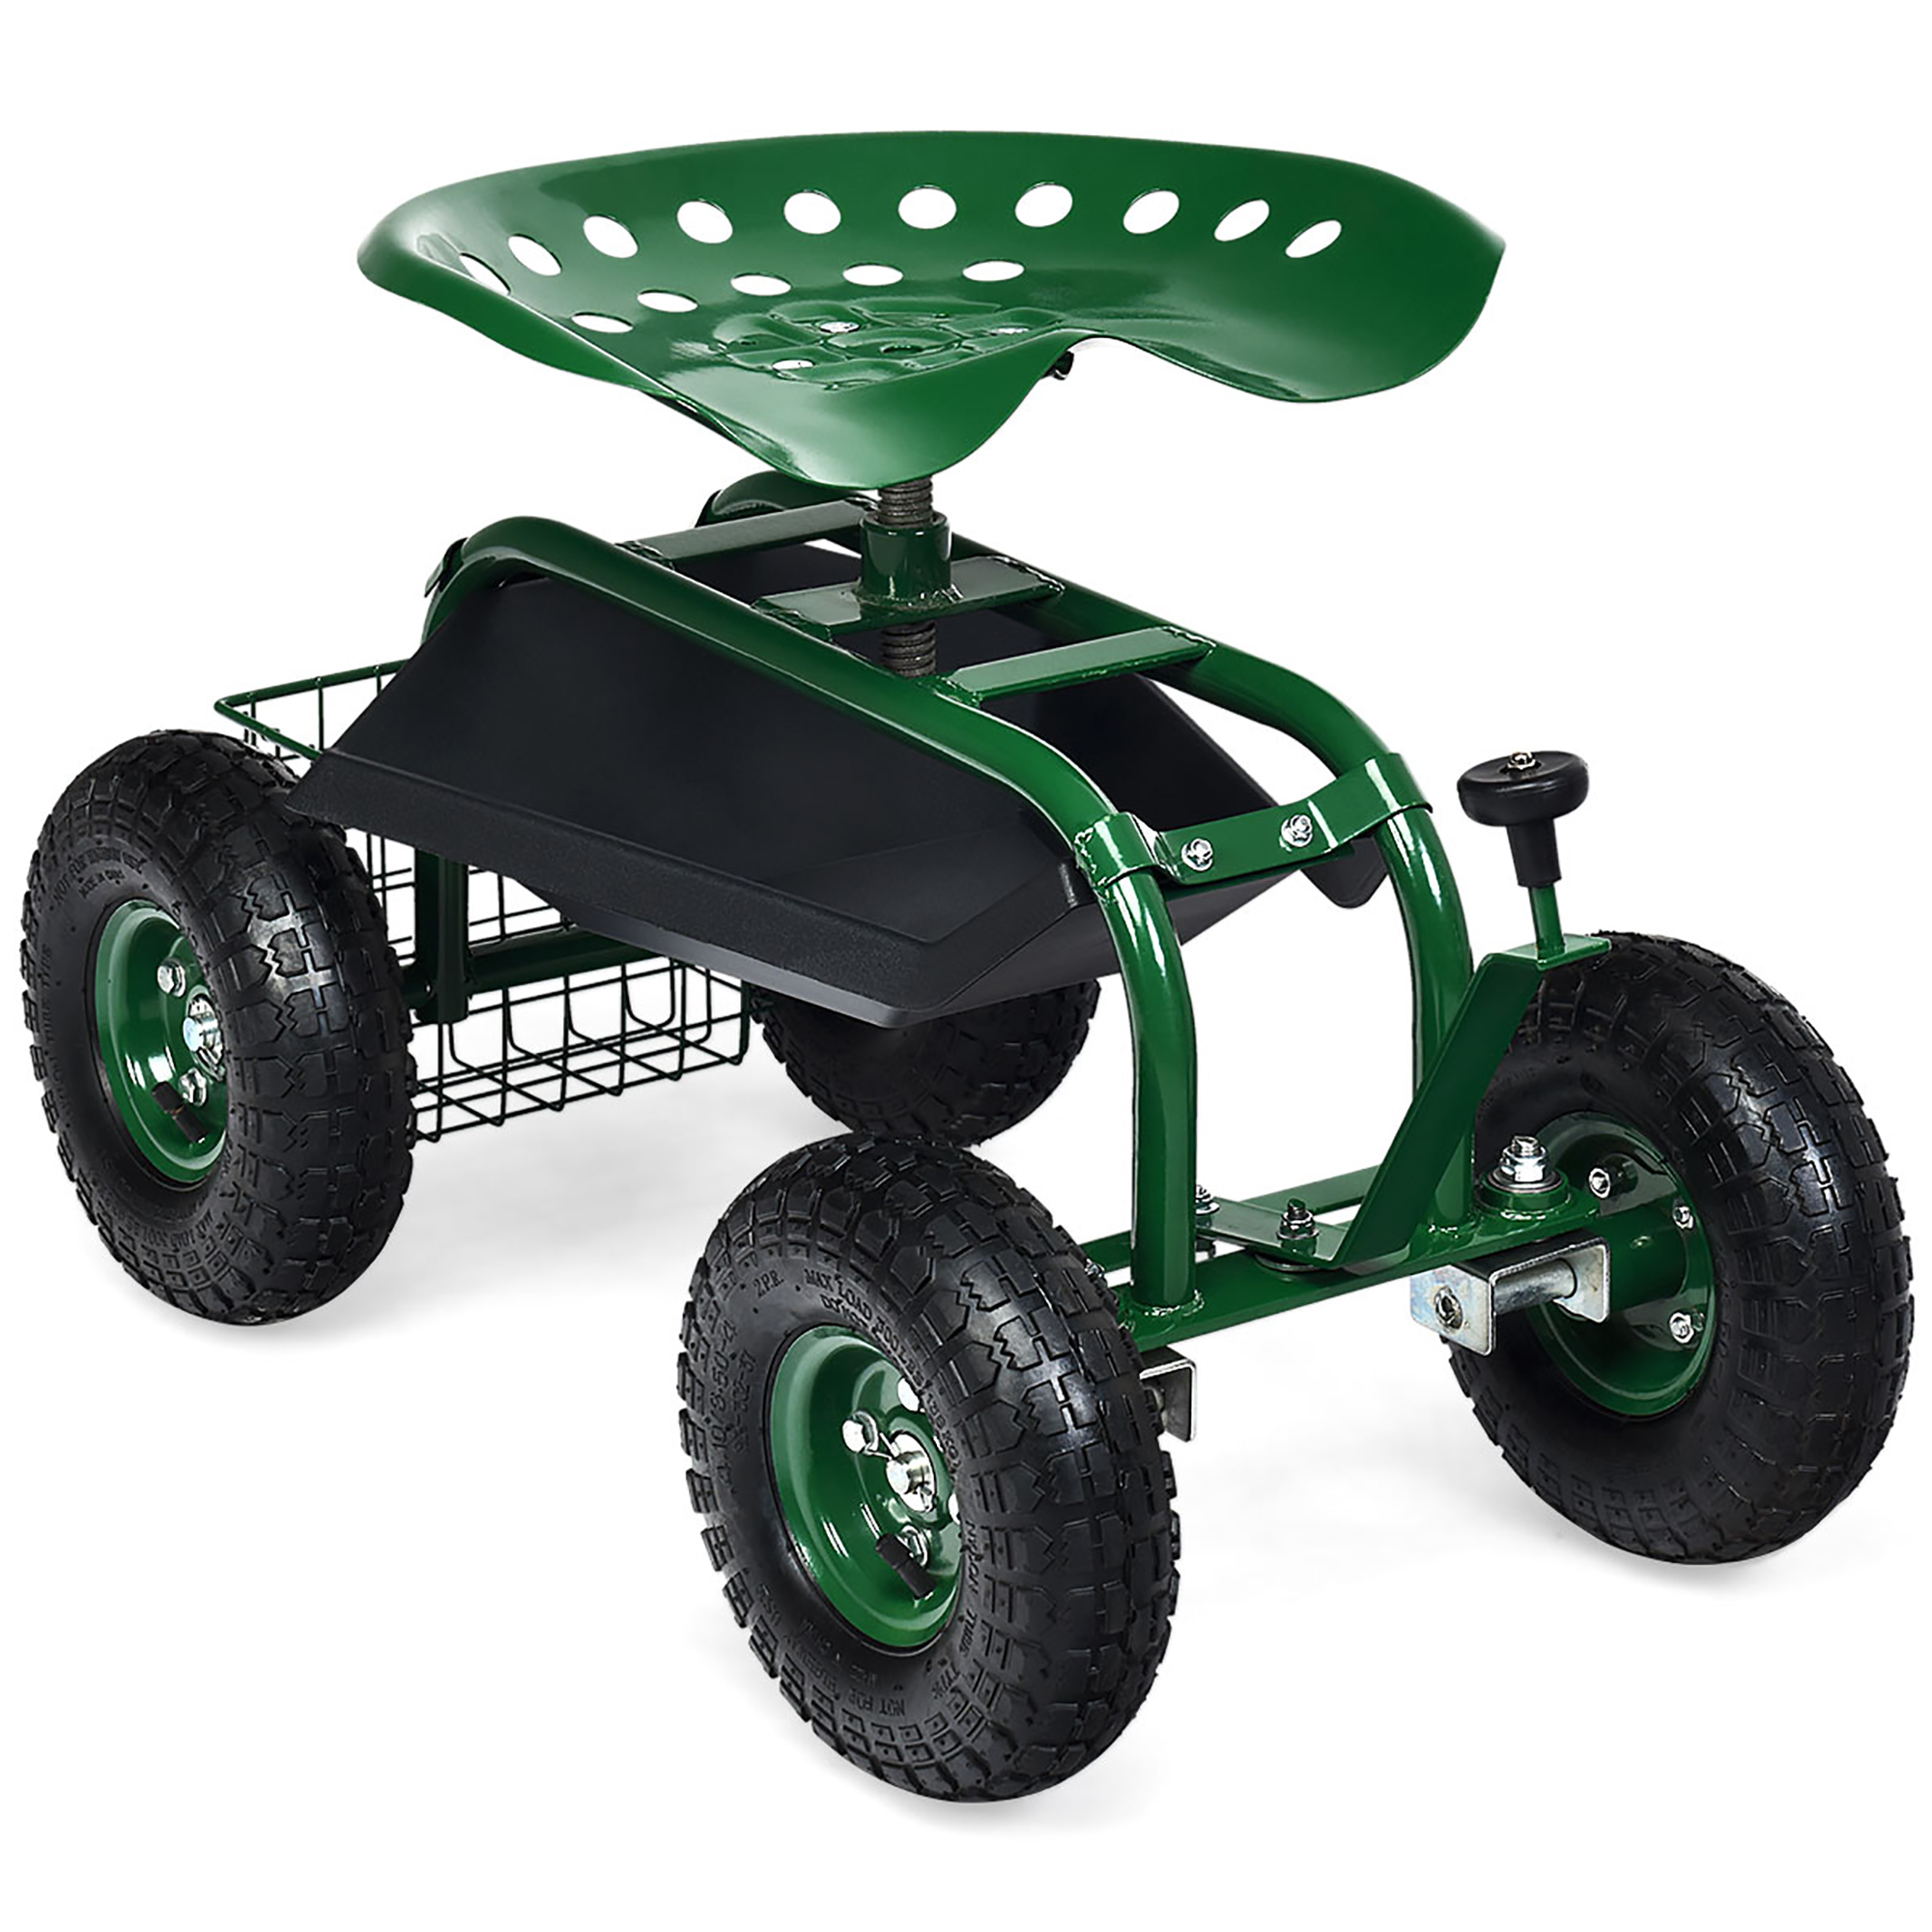 Costway Garden Cart Rolling Work Seat w/ Tool Tray Basket Green